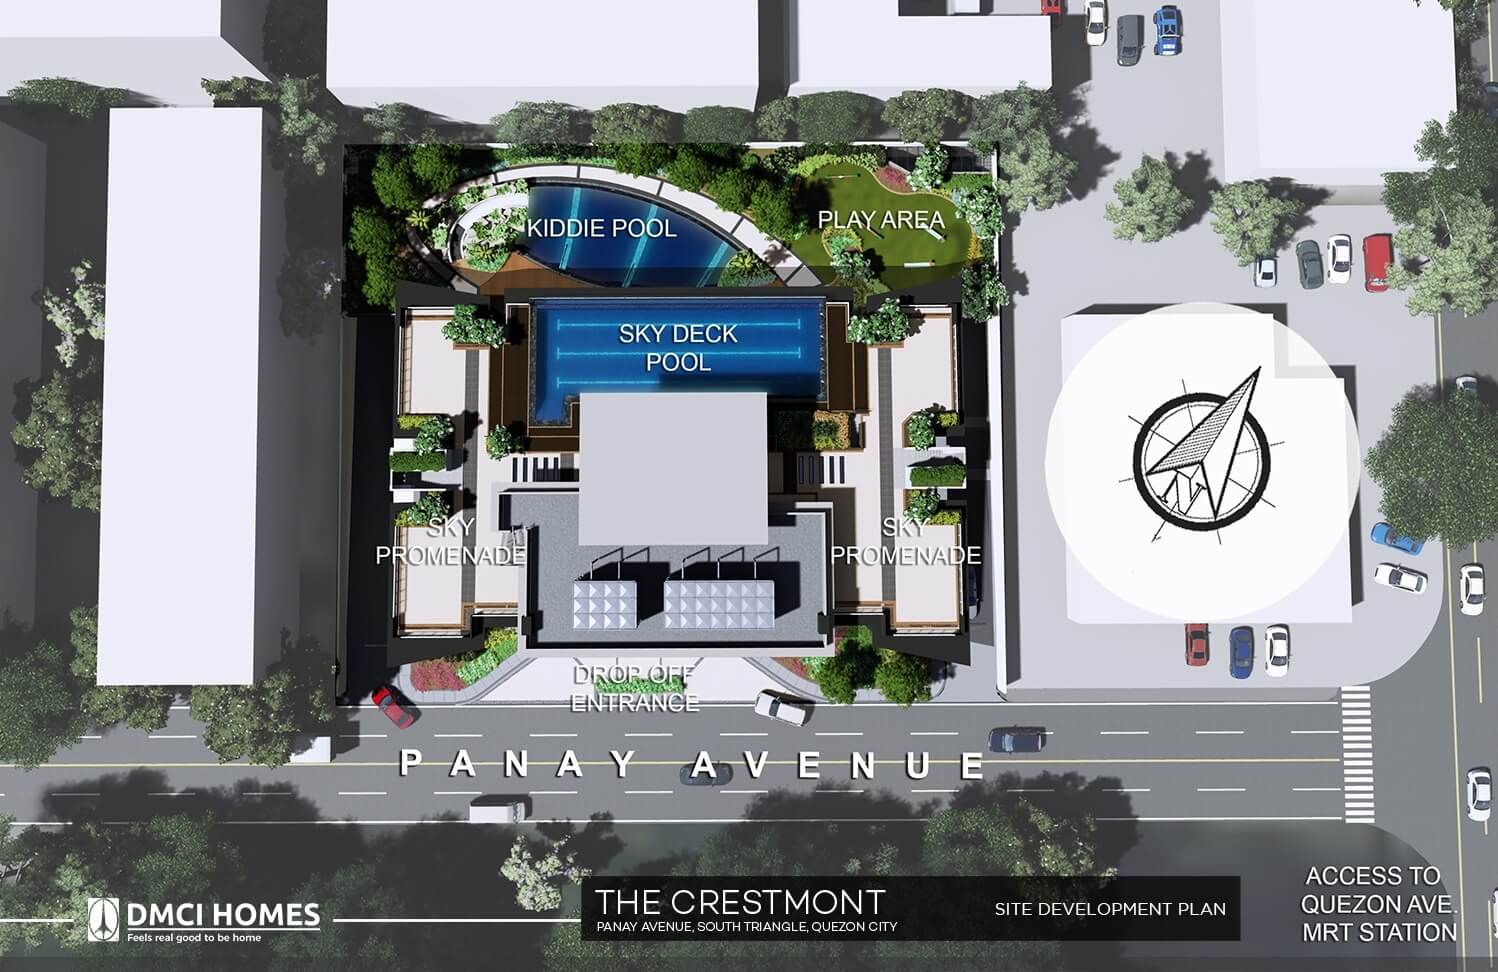 The Cresmont Development Plan